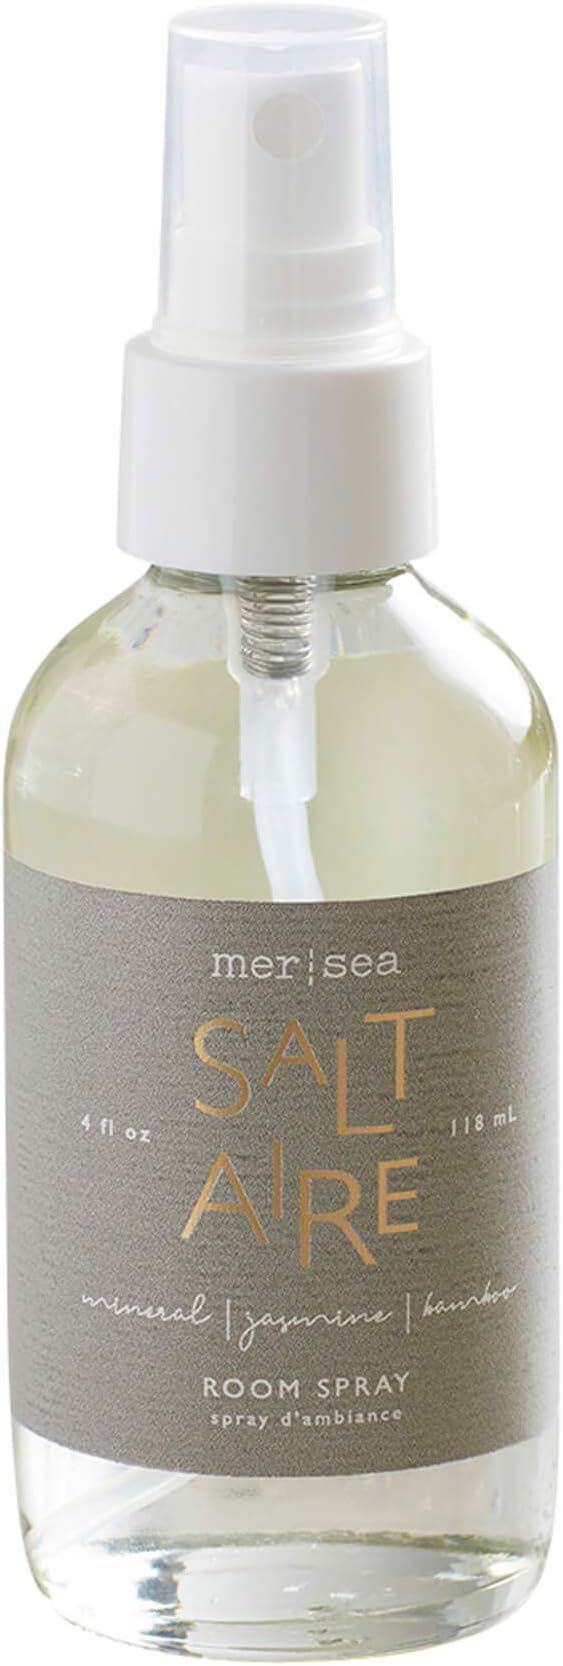 Mer Sea Luxury Room Spray - Saltaire, 4 Fl Oz | Amazon (US)